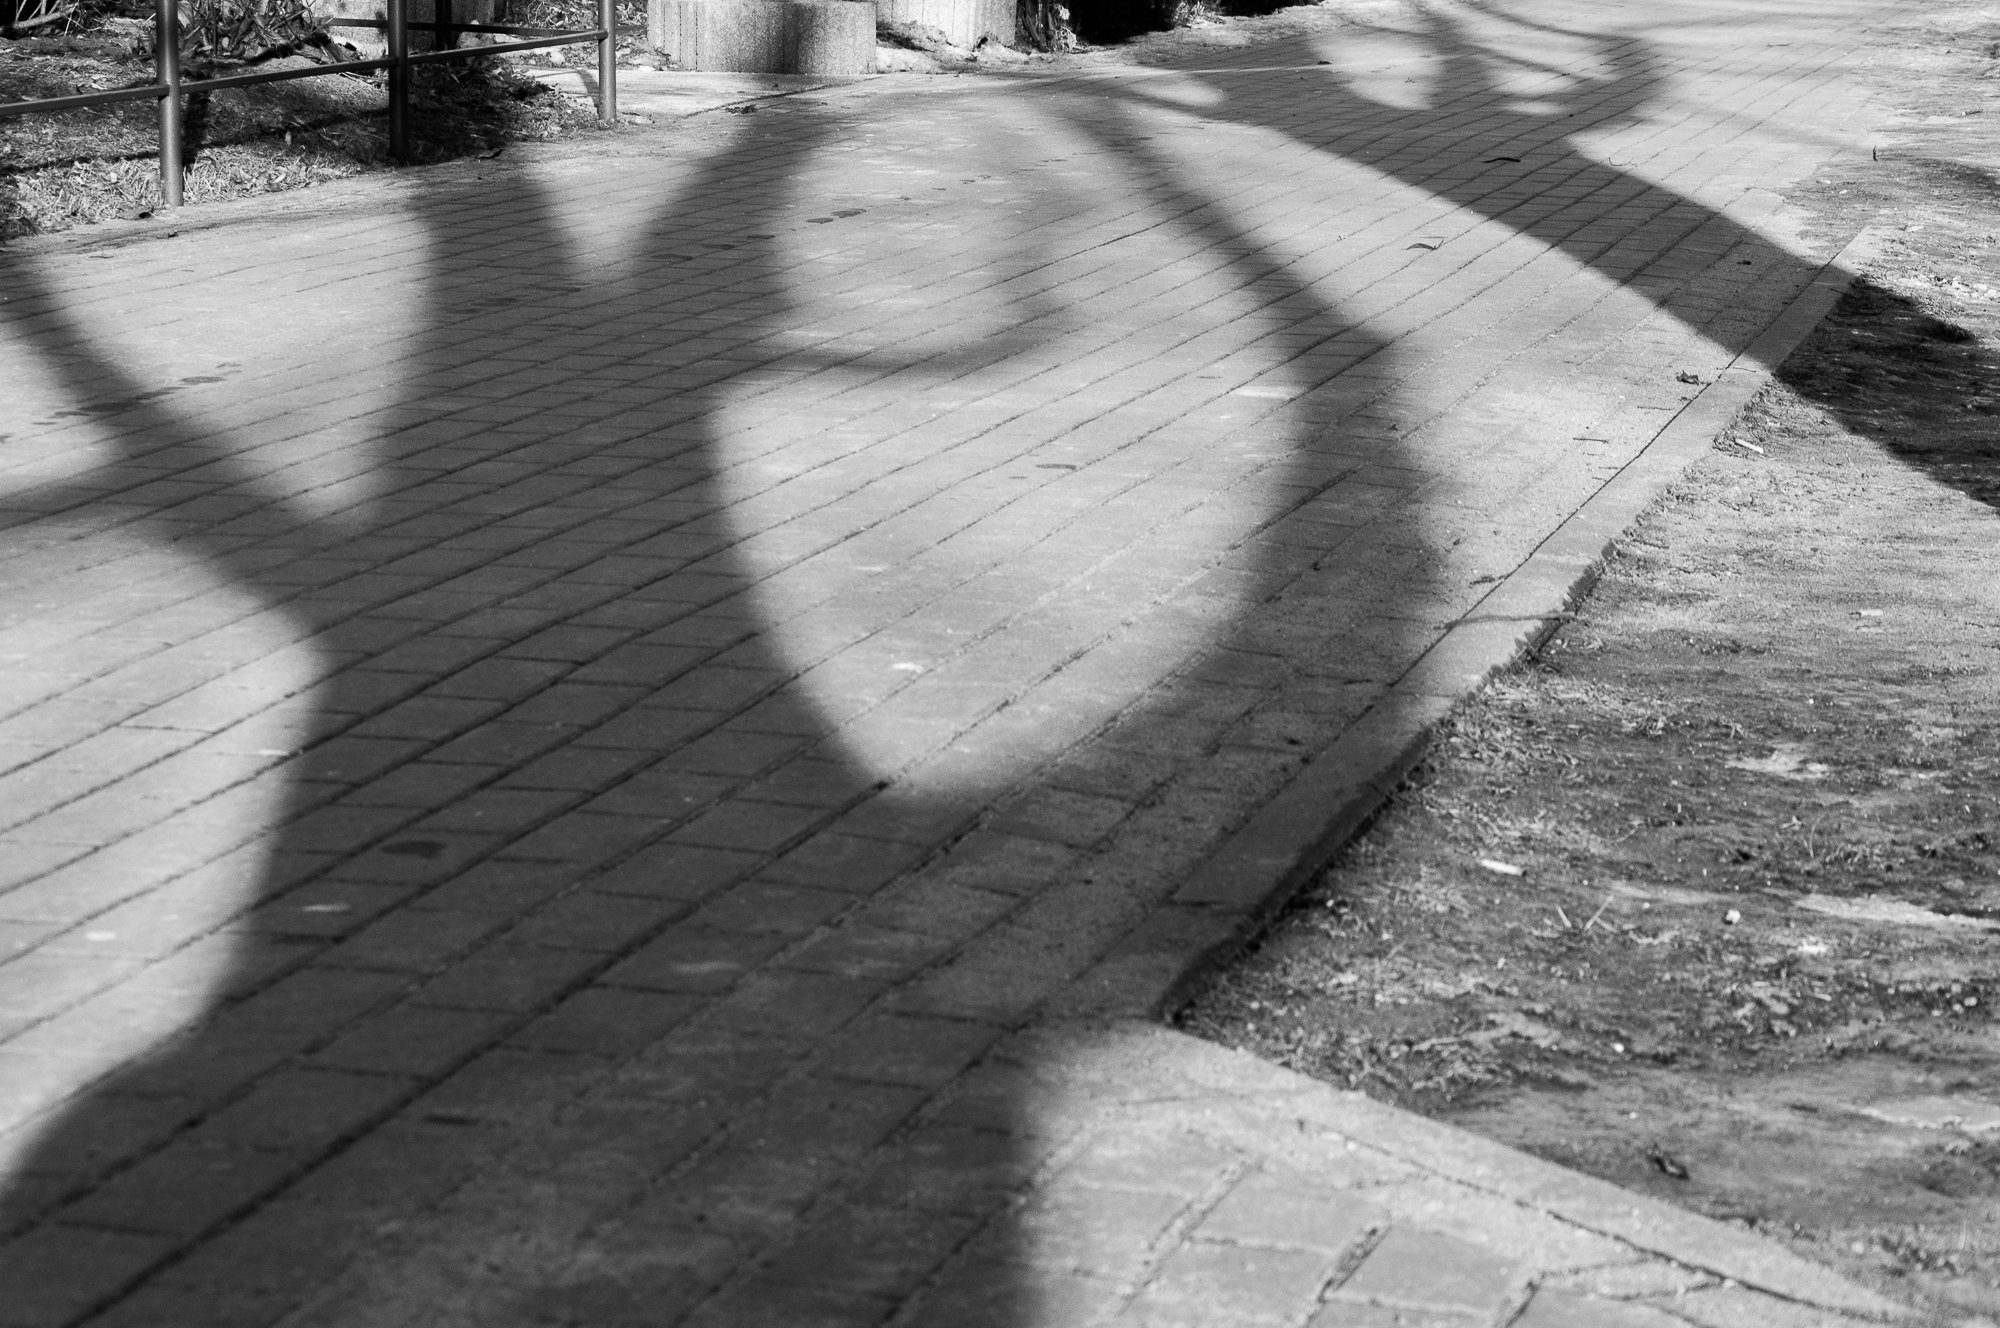 Adam Mazek Photography Warsaw (Warszawa) 2017. Post: "Part of history." Minimalism. Shadow of the tree.